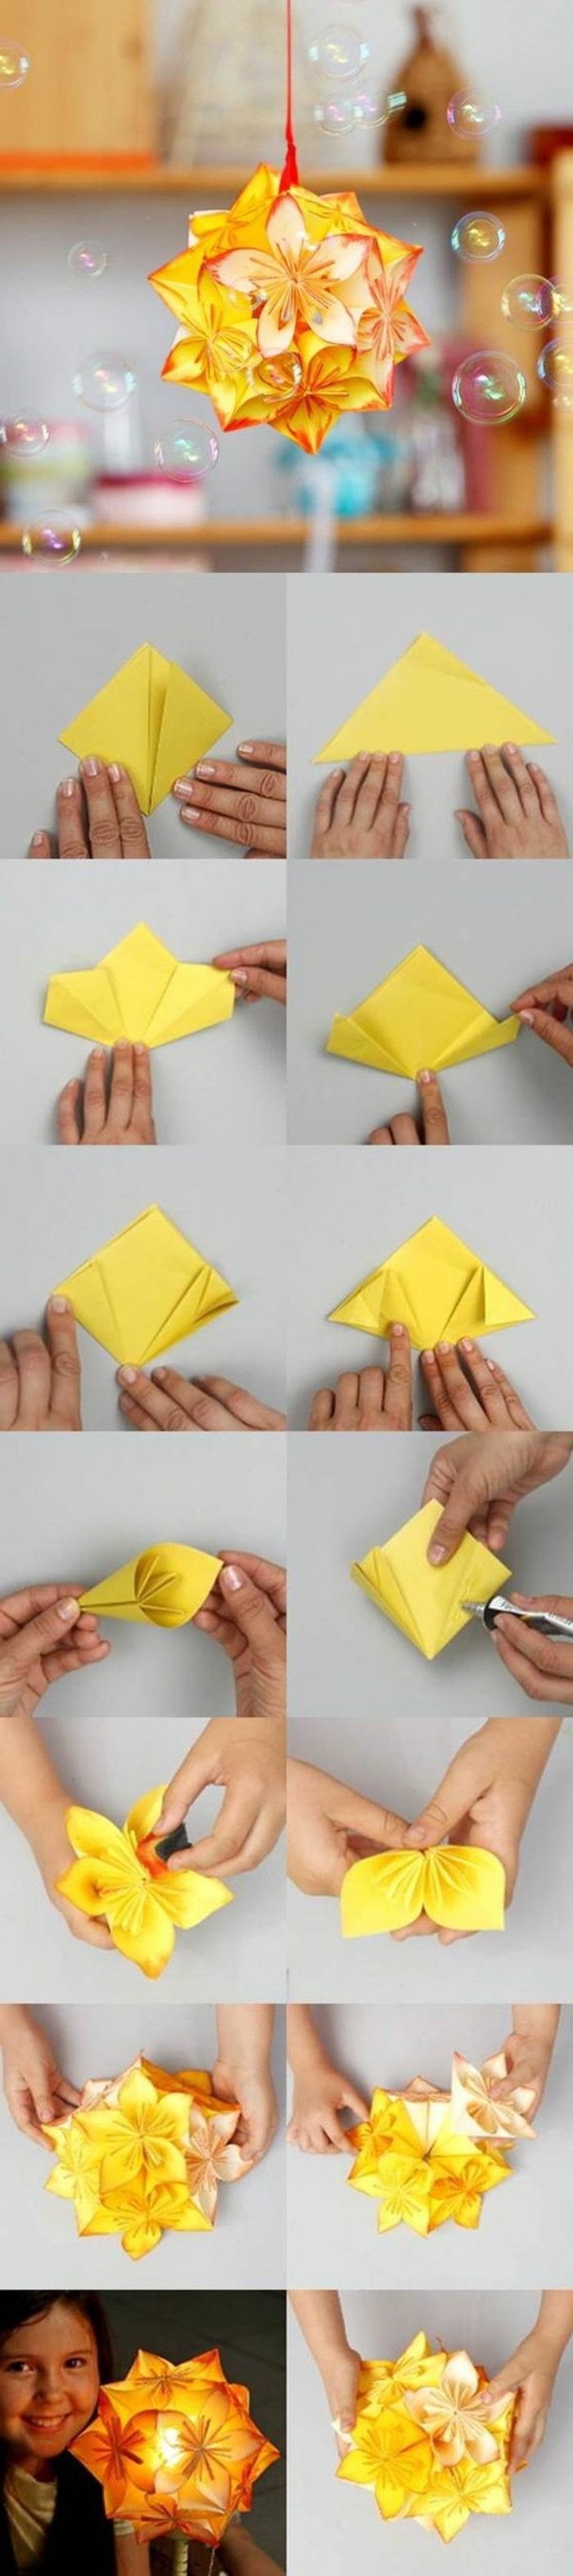 origami rynka origami-vikning instruktion-origami-vikning teknik foldingmanuals-papper